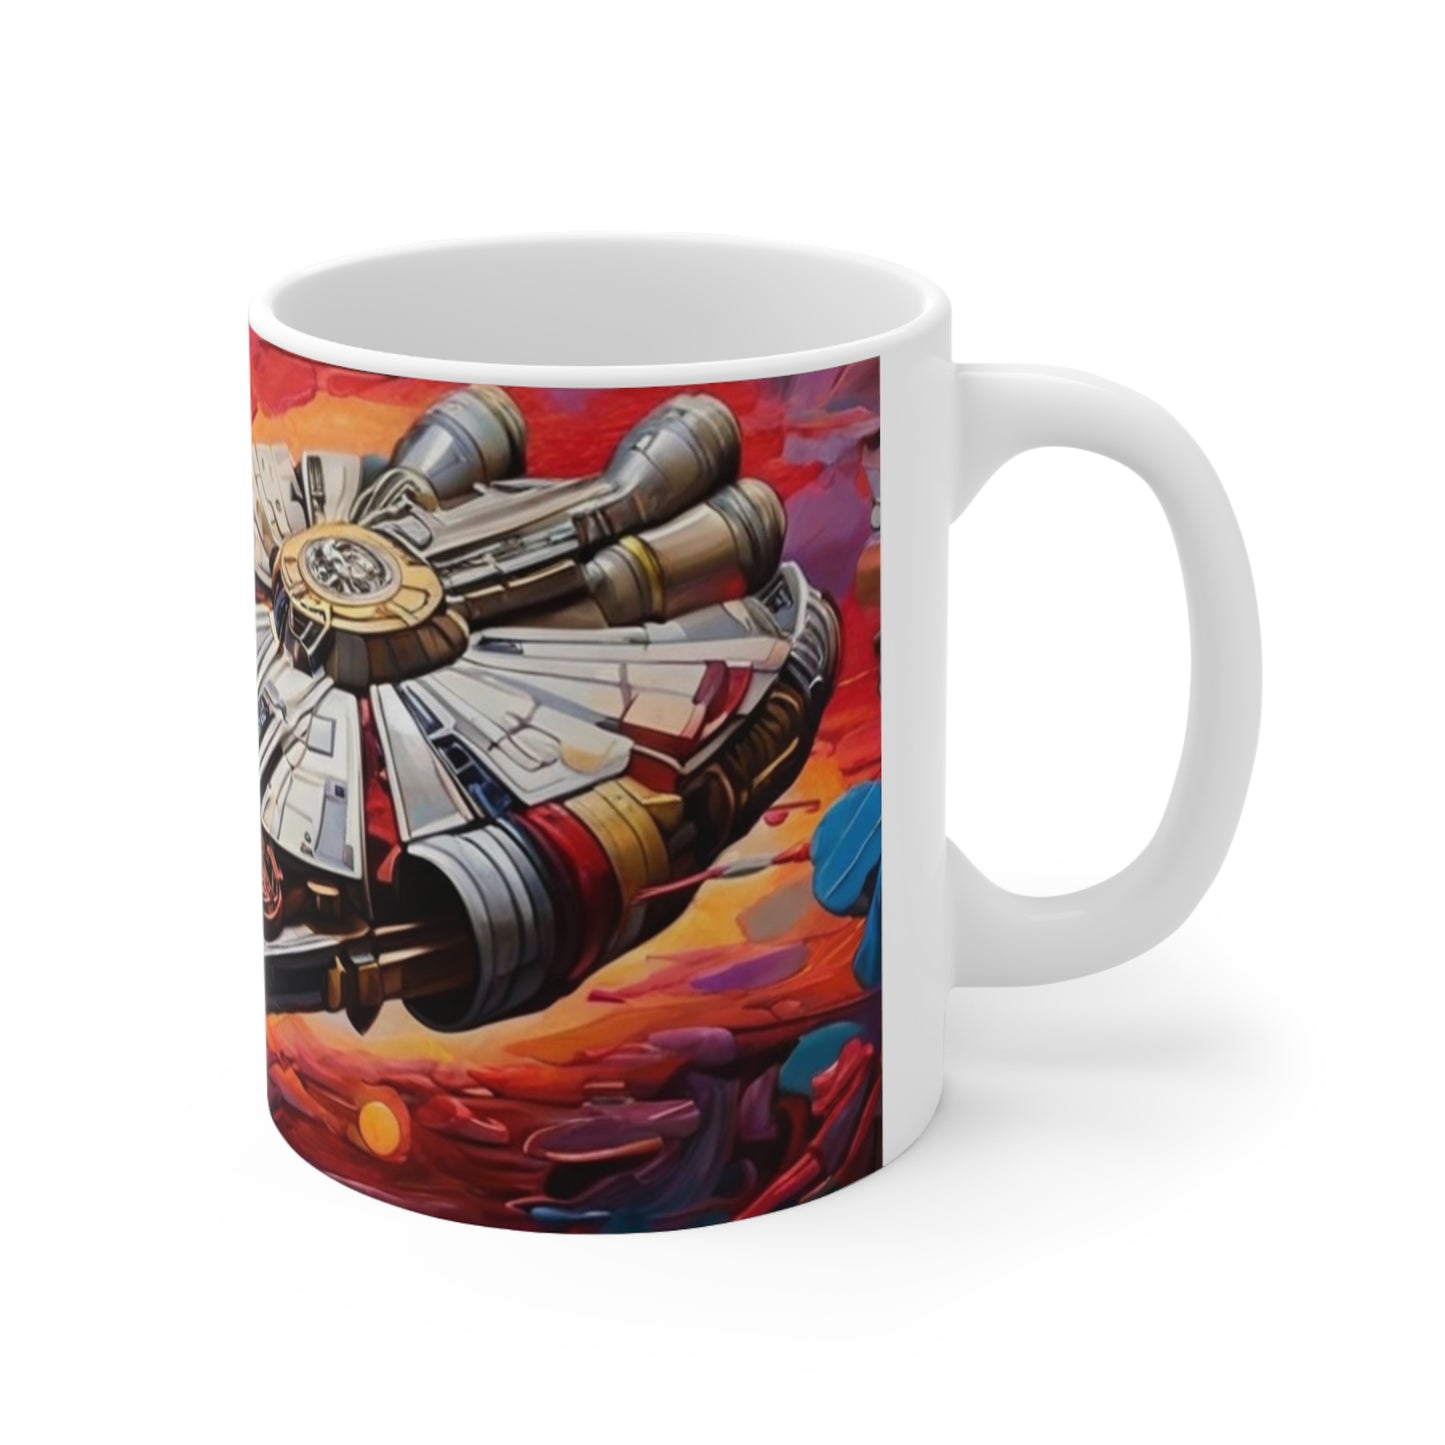 Colourful Millennium Falcon Artwork Mug - Ceramic Coffee Mug 11oz